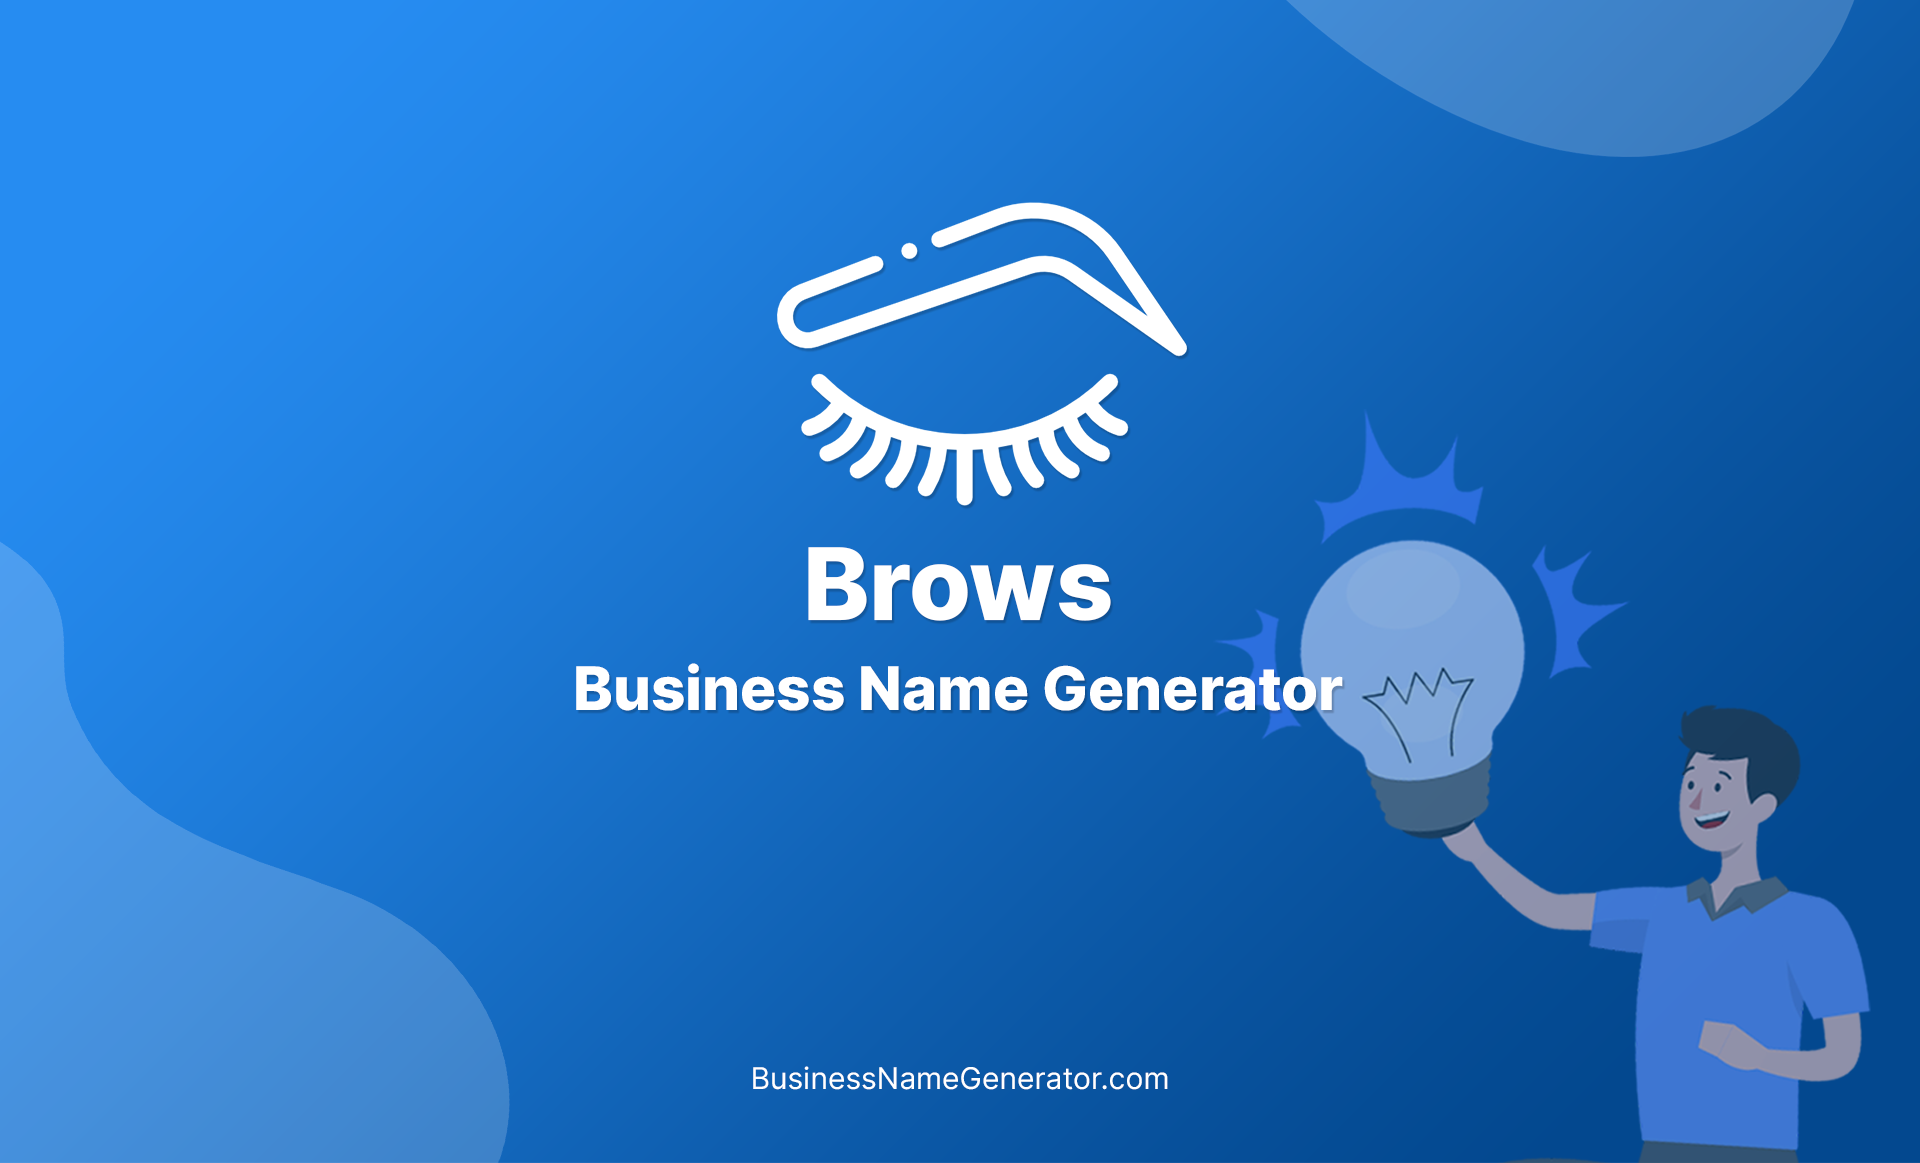 Brows Business Name Generator